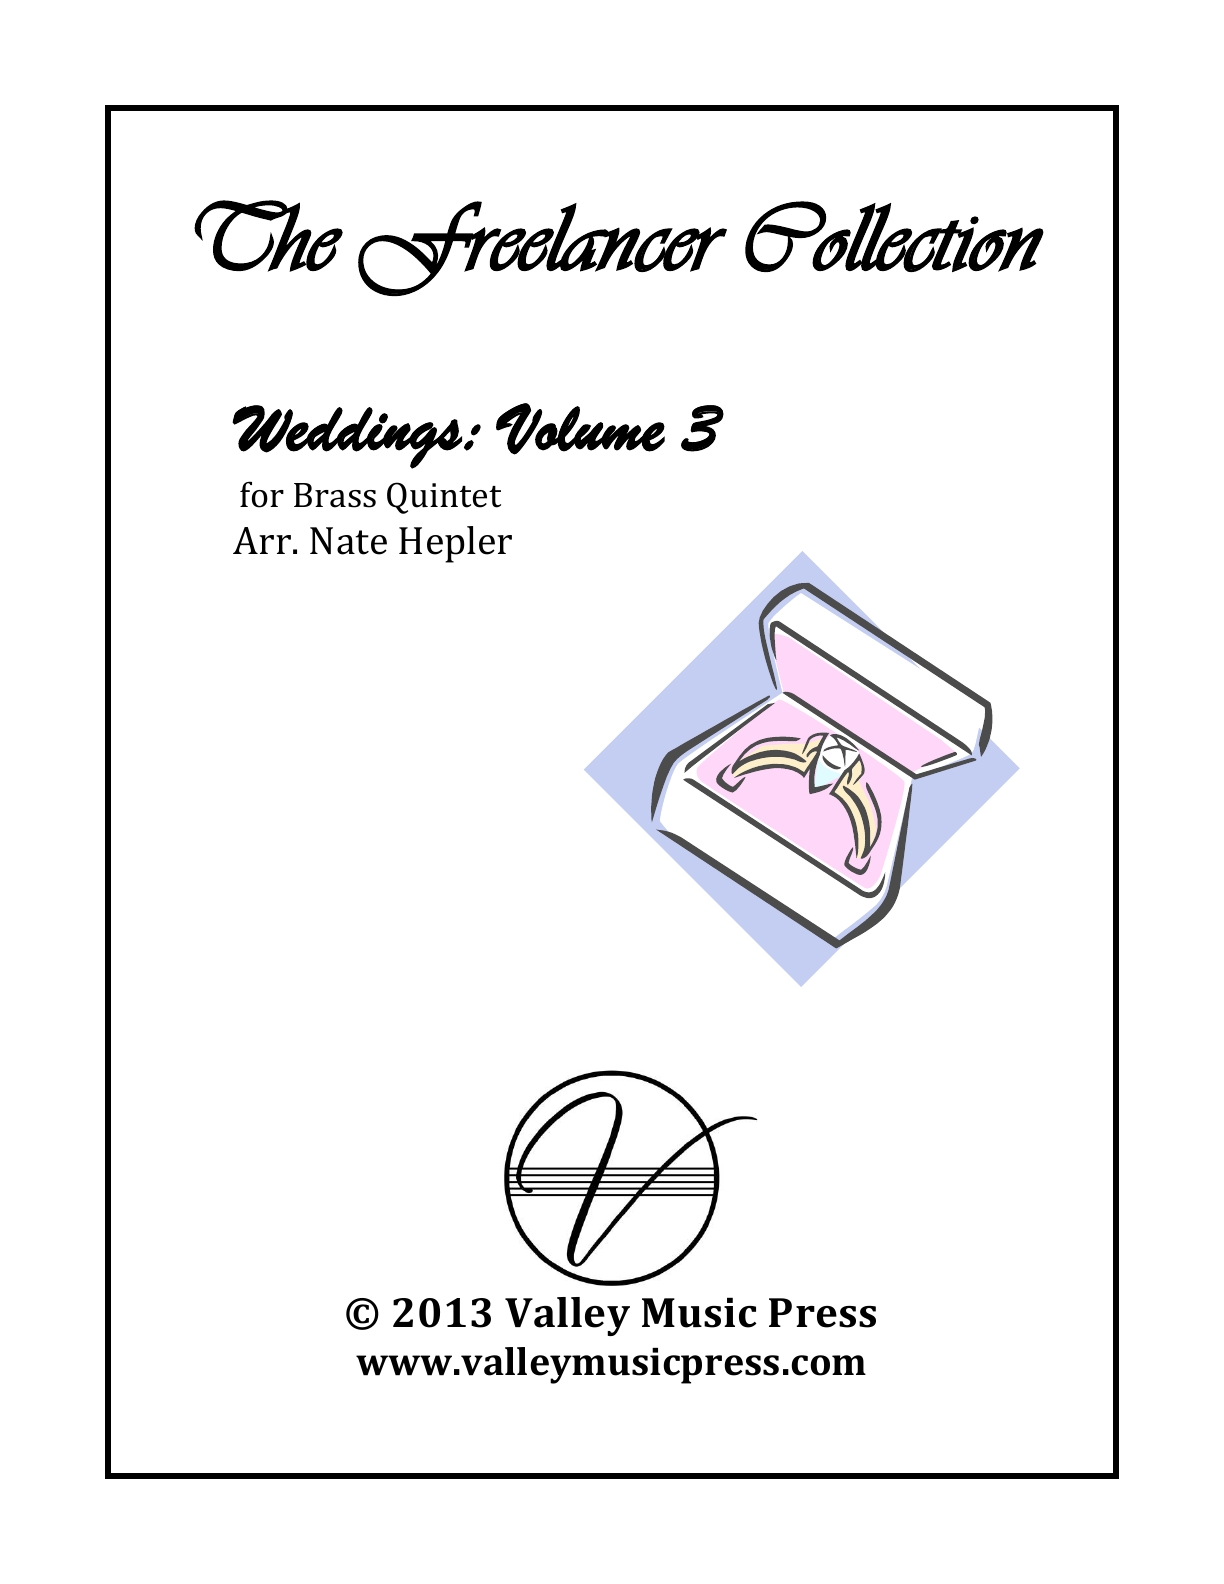 Hepler - The Freelancer Collection - Weddings: Vol. 3 (BQ)